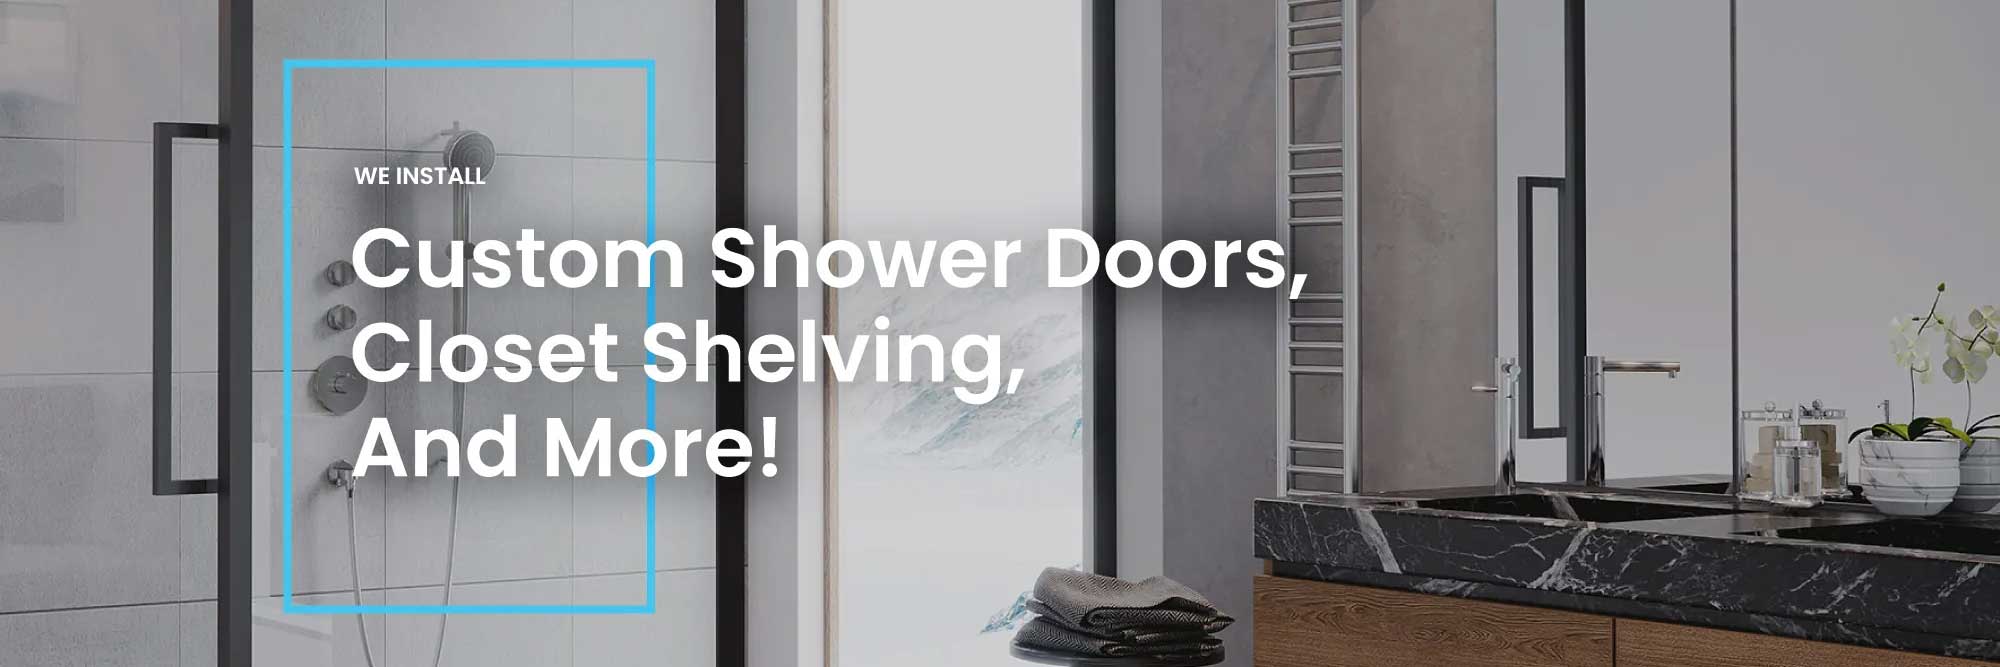 We install Custom Shower Doors, Closet Shelving, and more!